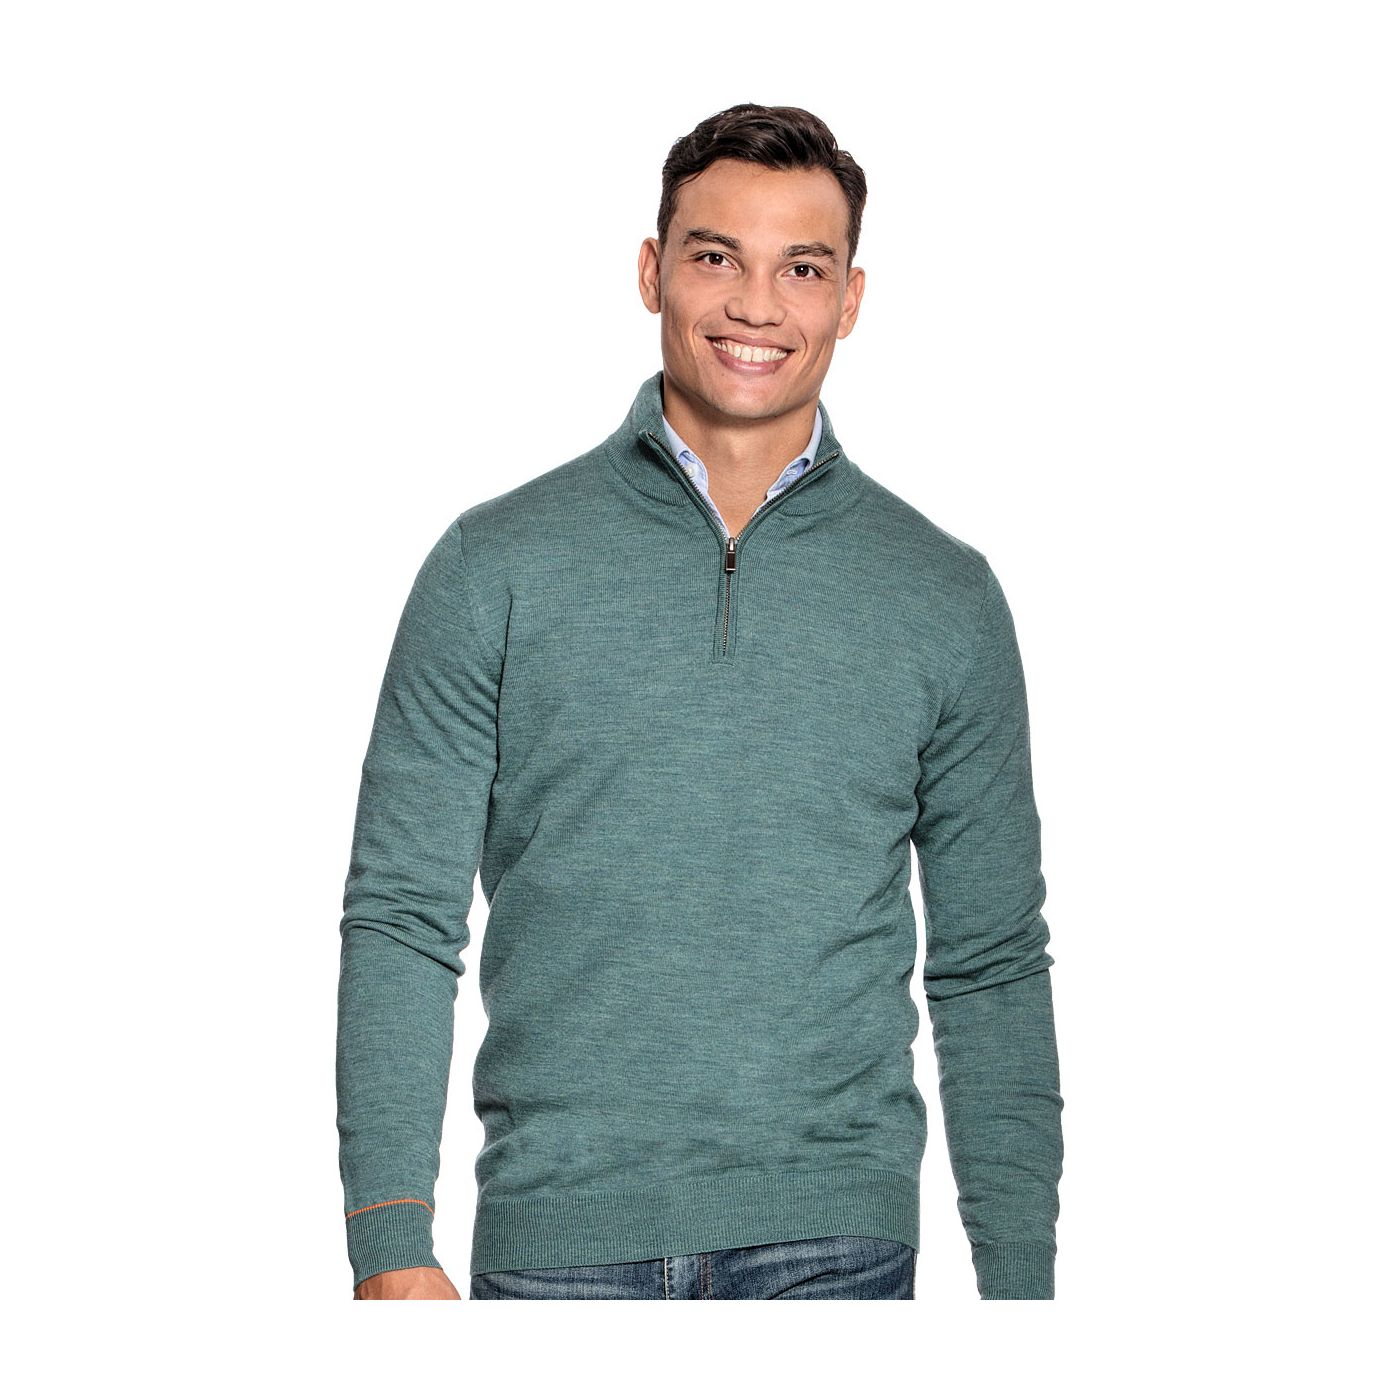 Extra long half zip sweater for men made of Merino wool in Light green